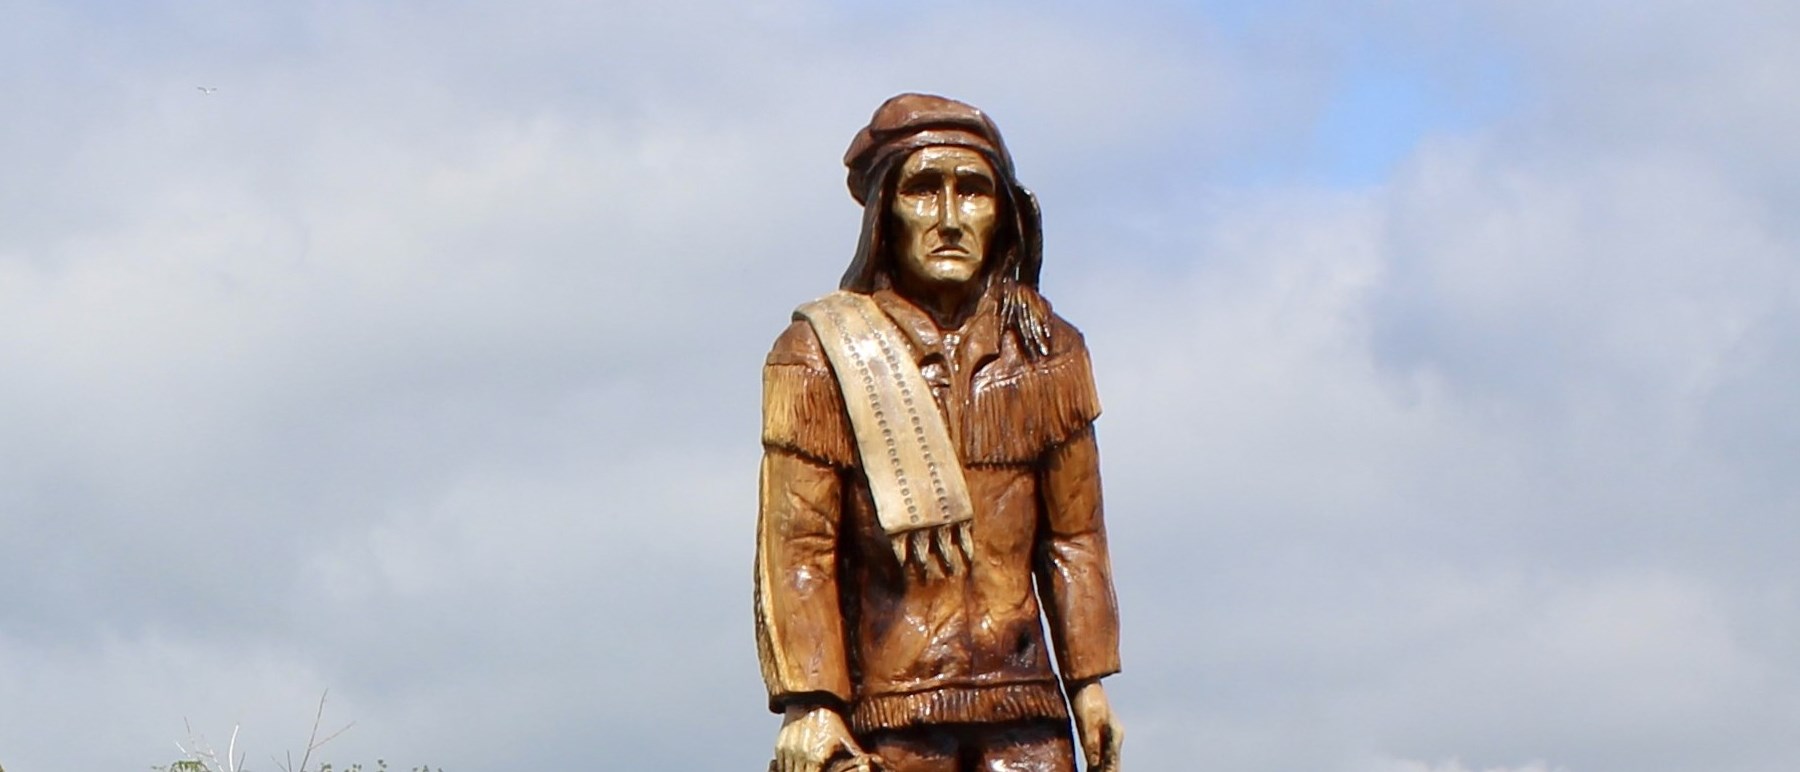 chief tecumseh sculpture at lakewood beach